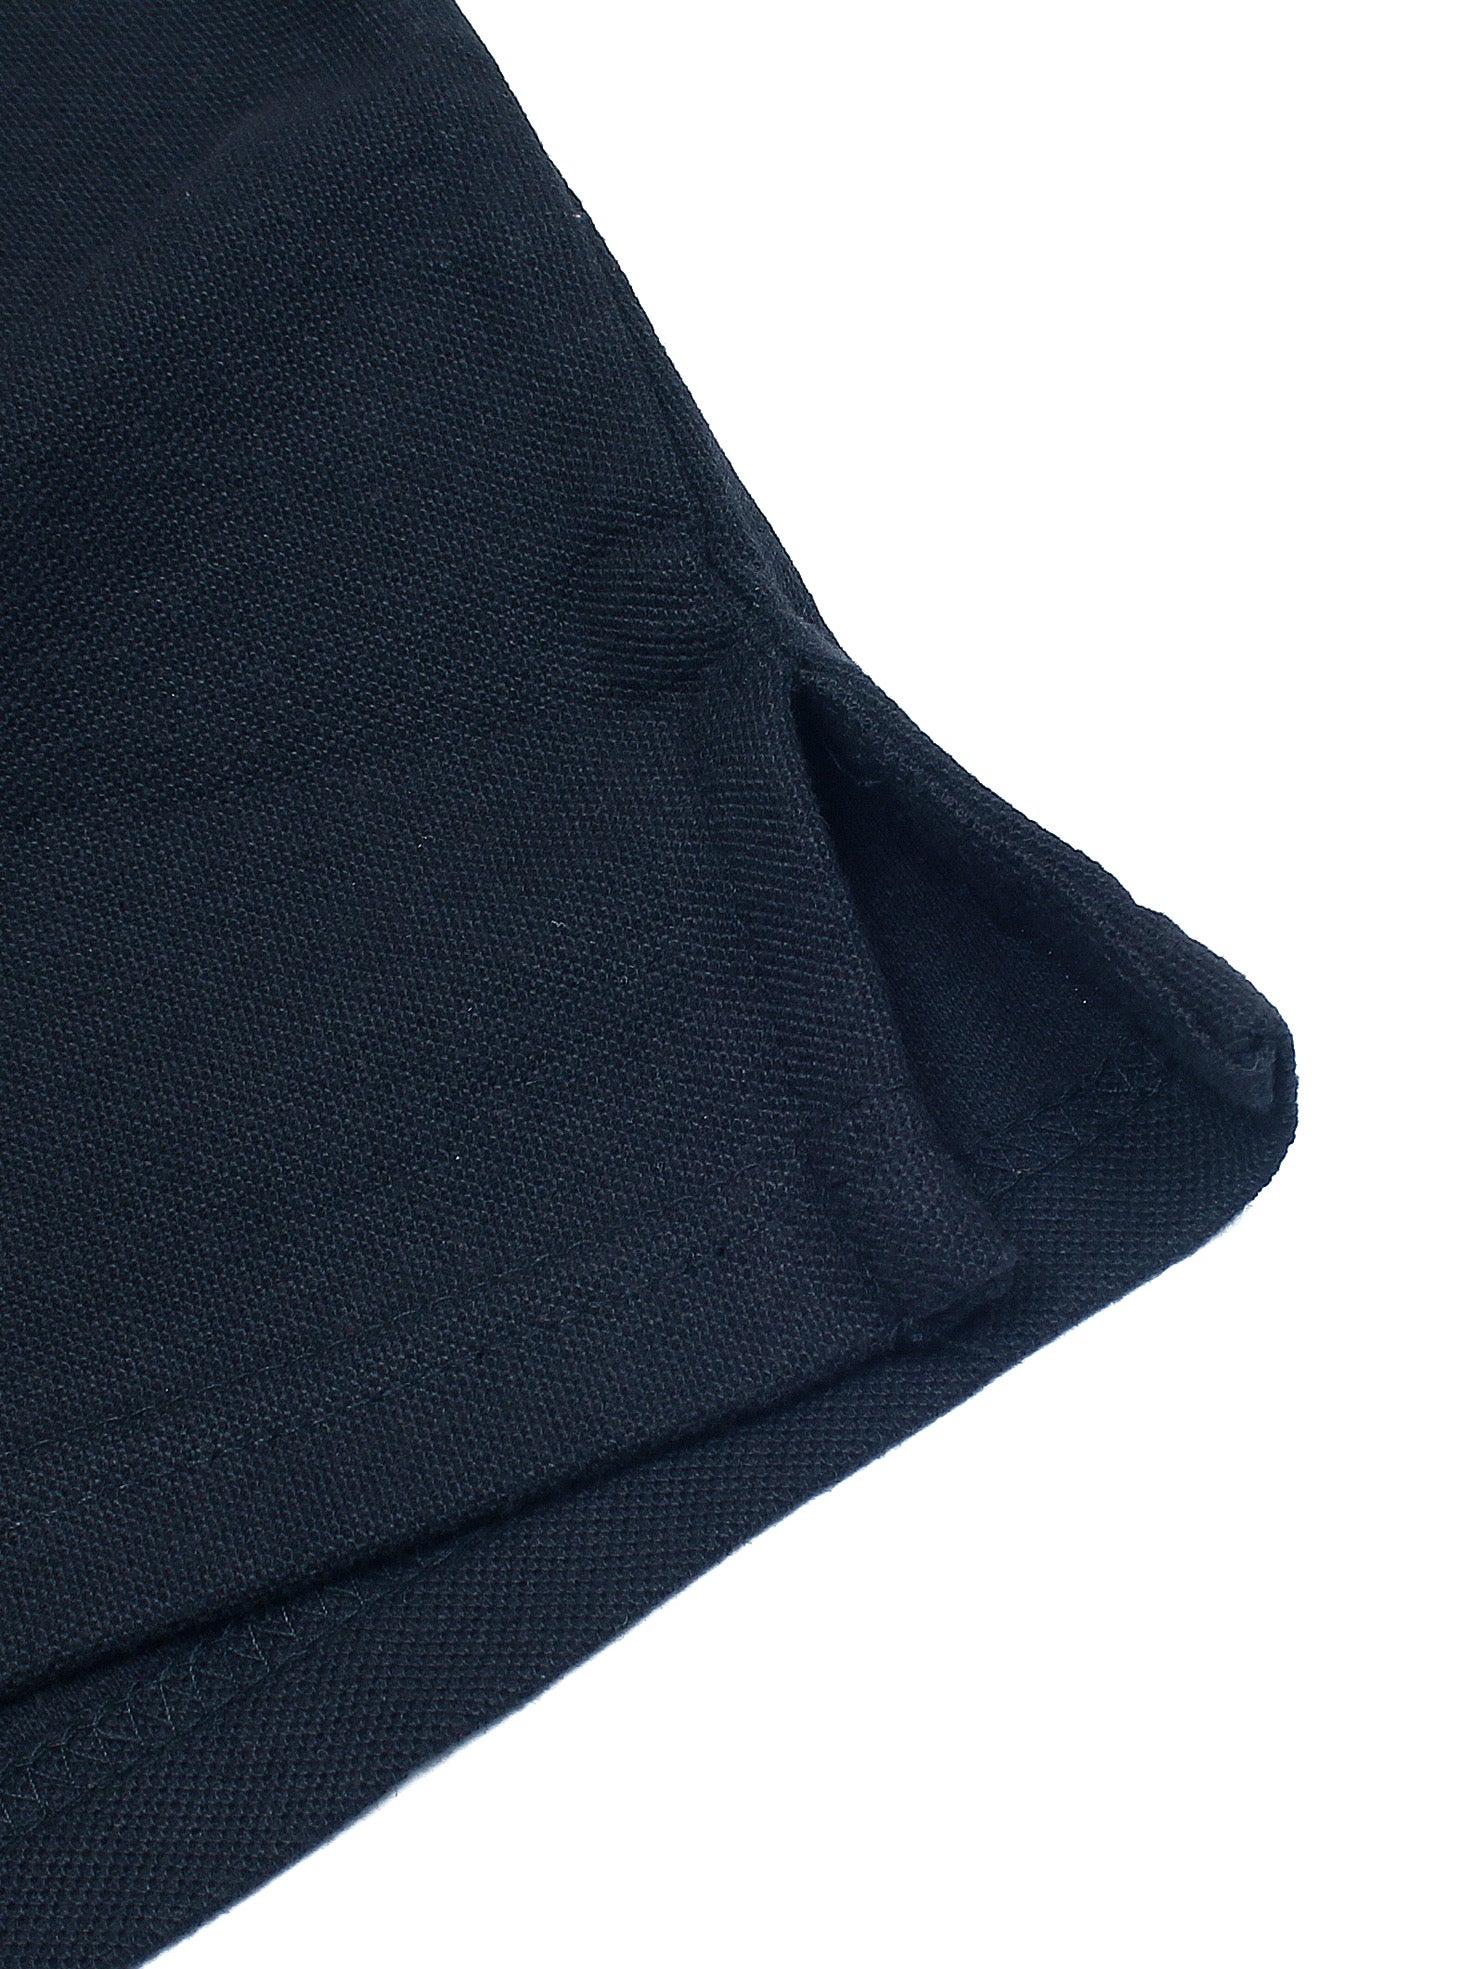 TMY soft cotton navy polo shirt(00320)